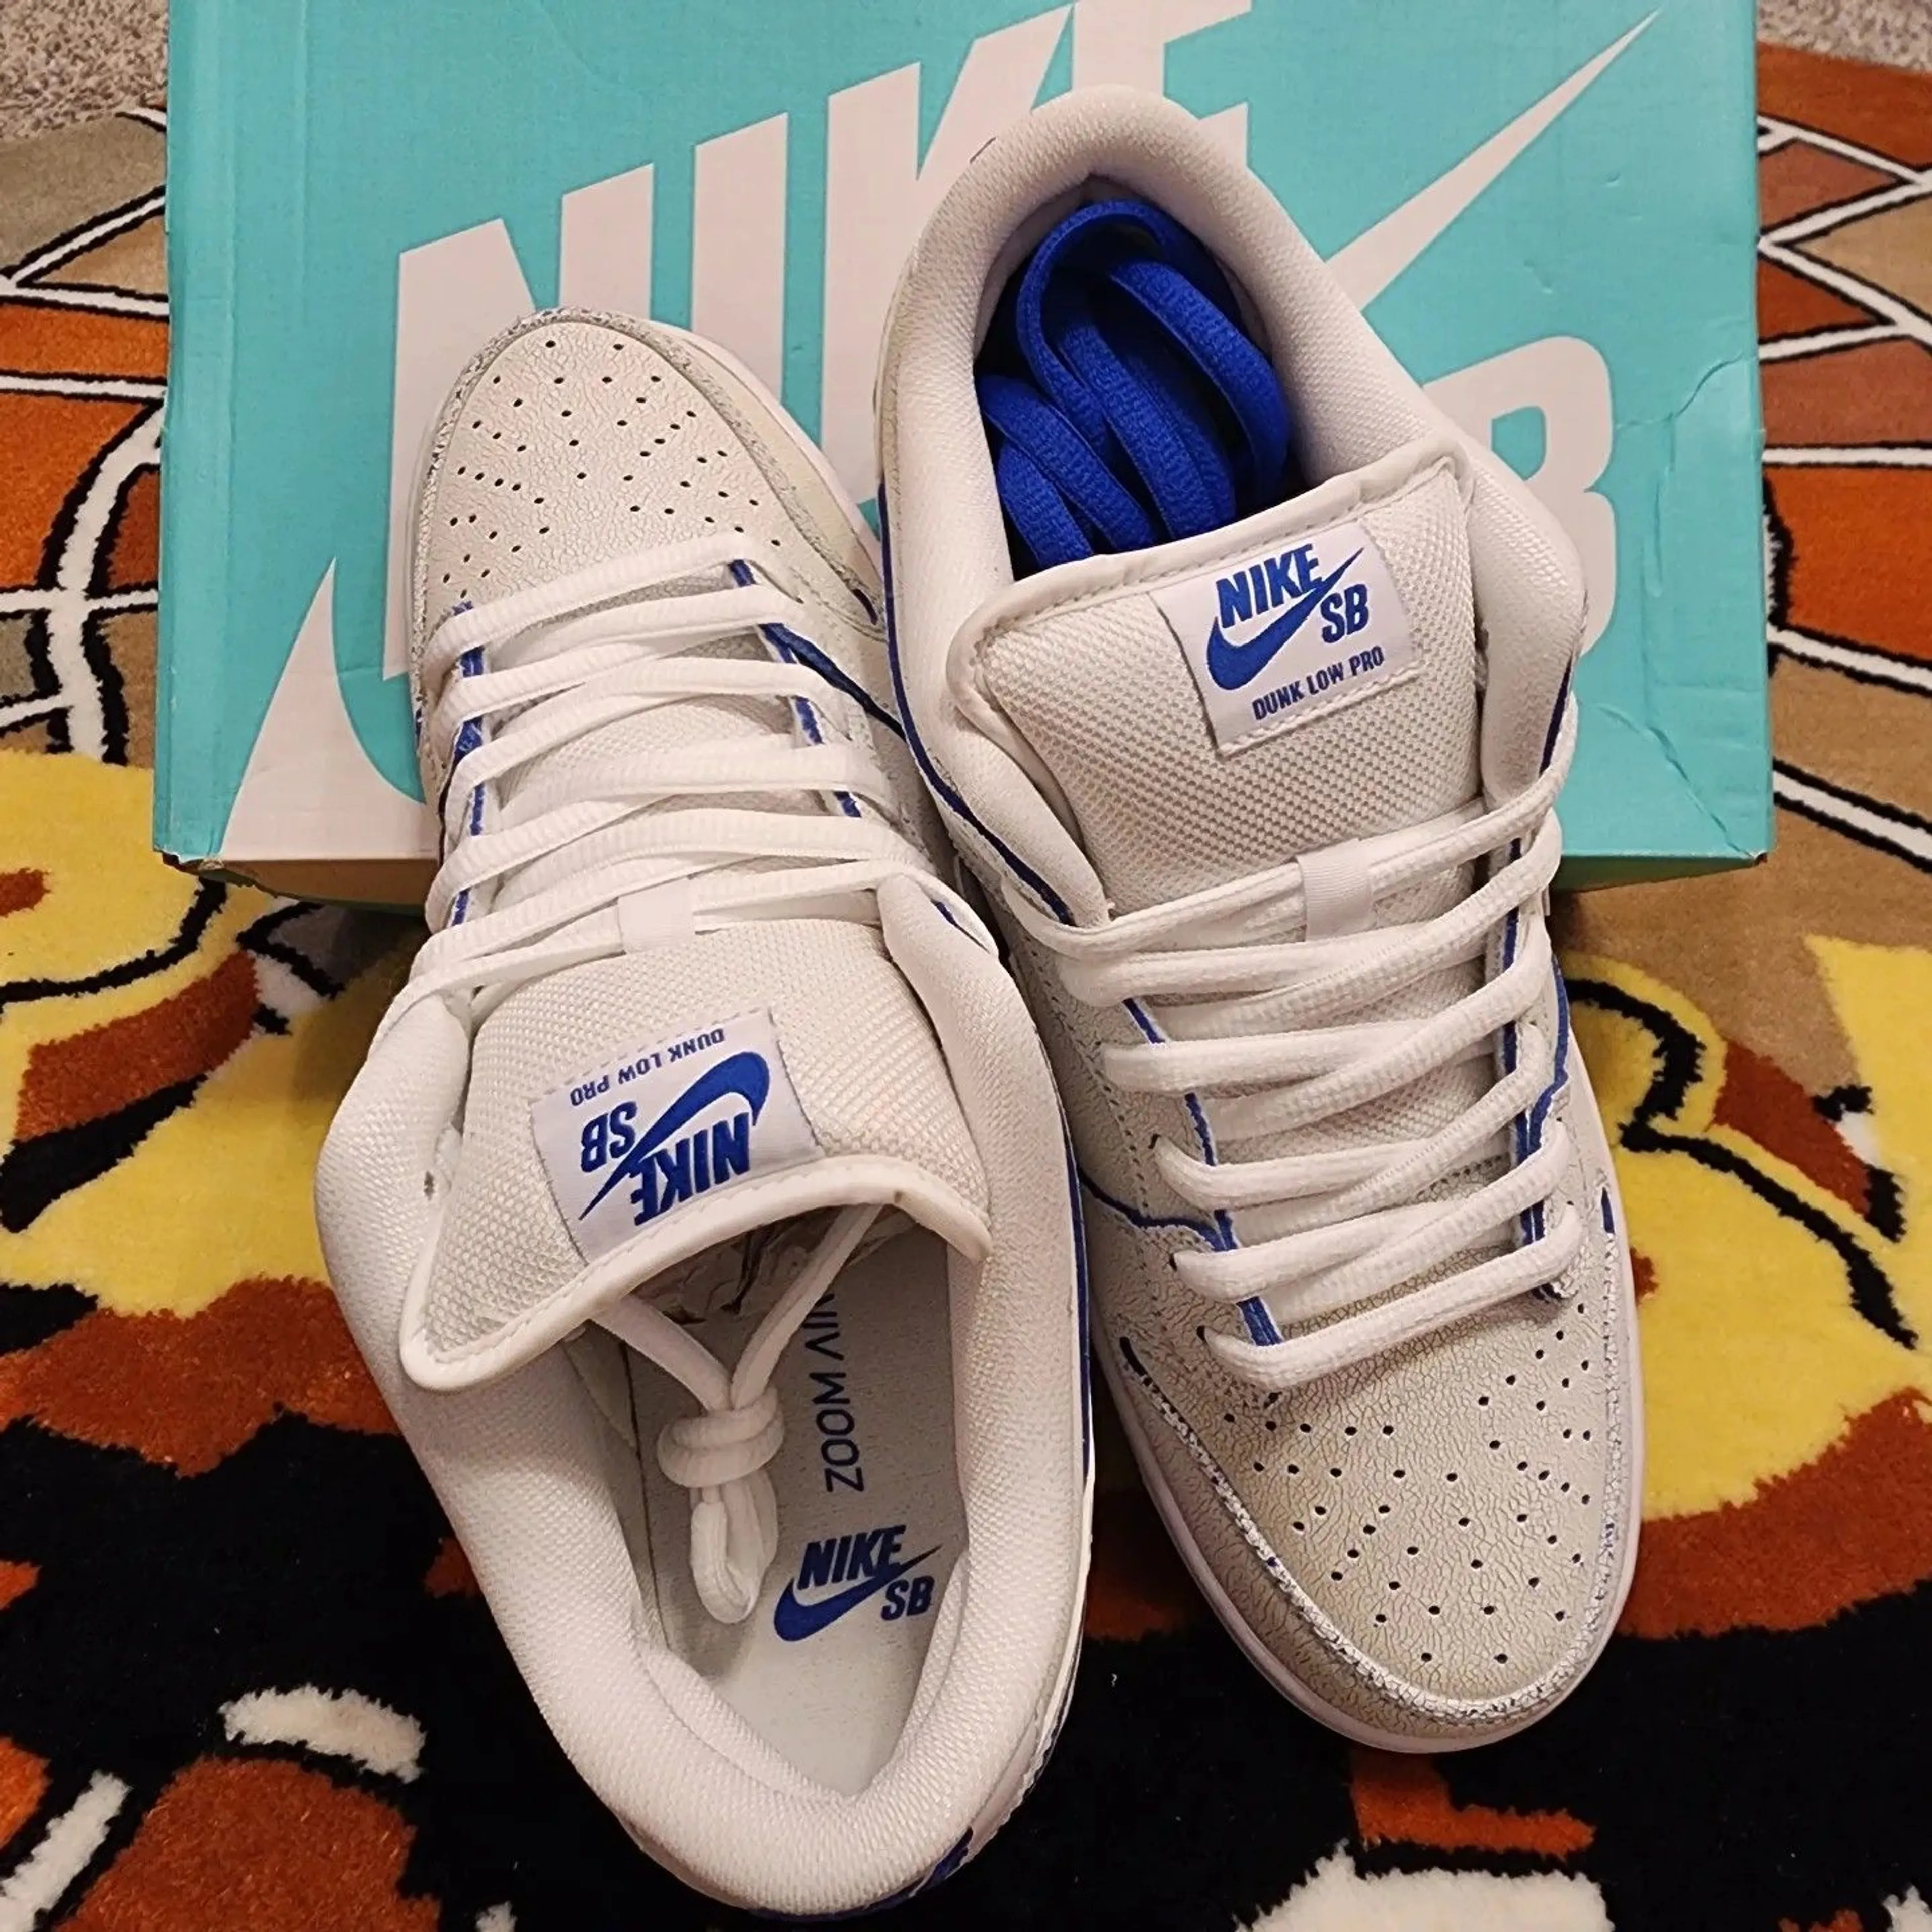 Nike SB DUNK LOW Premium - Cracked Leather Blue (2019) Men's Size 9.5 CJ6884 -100 · Whatnot: Buy